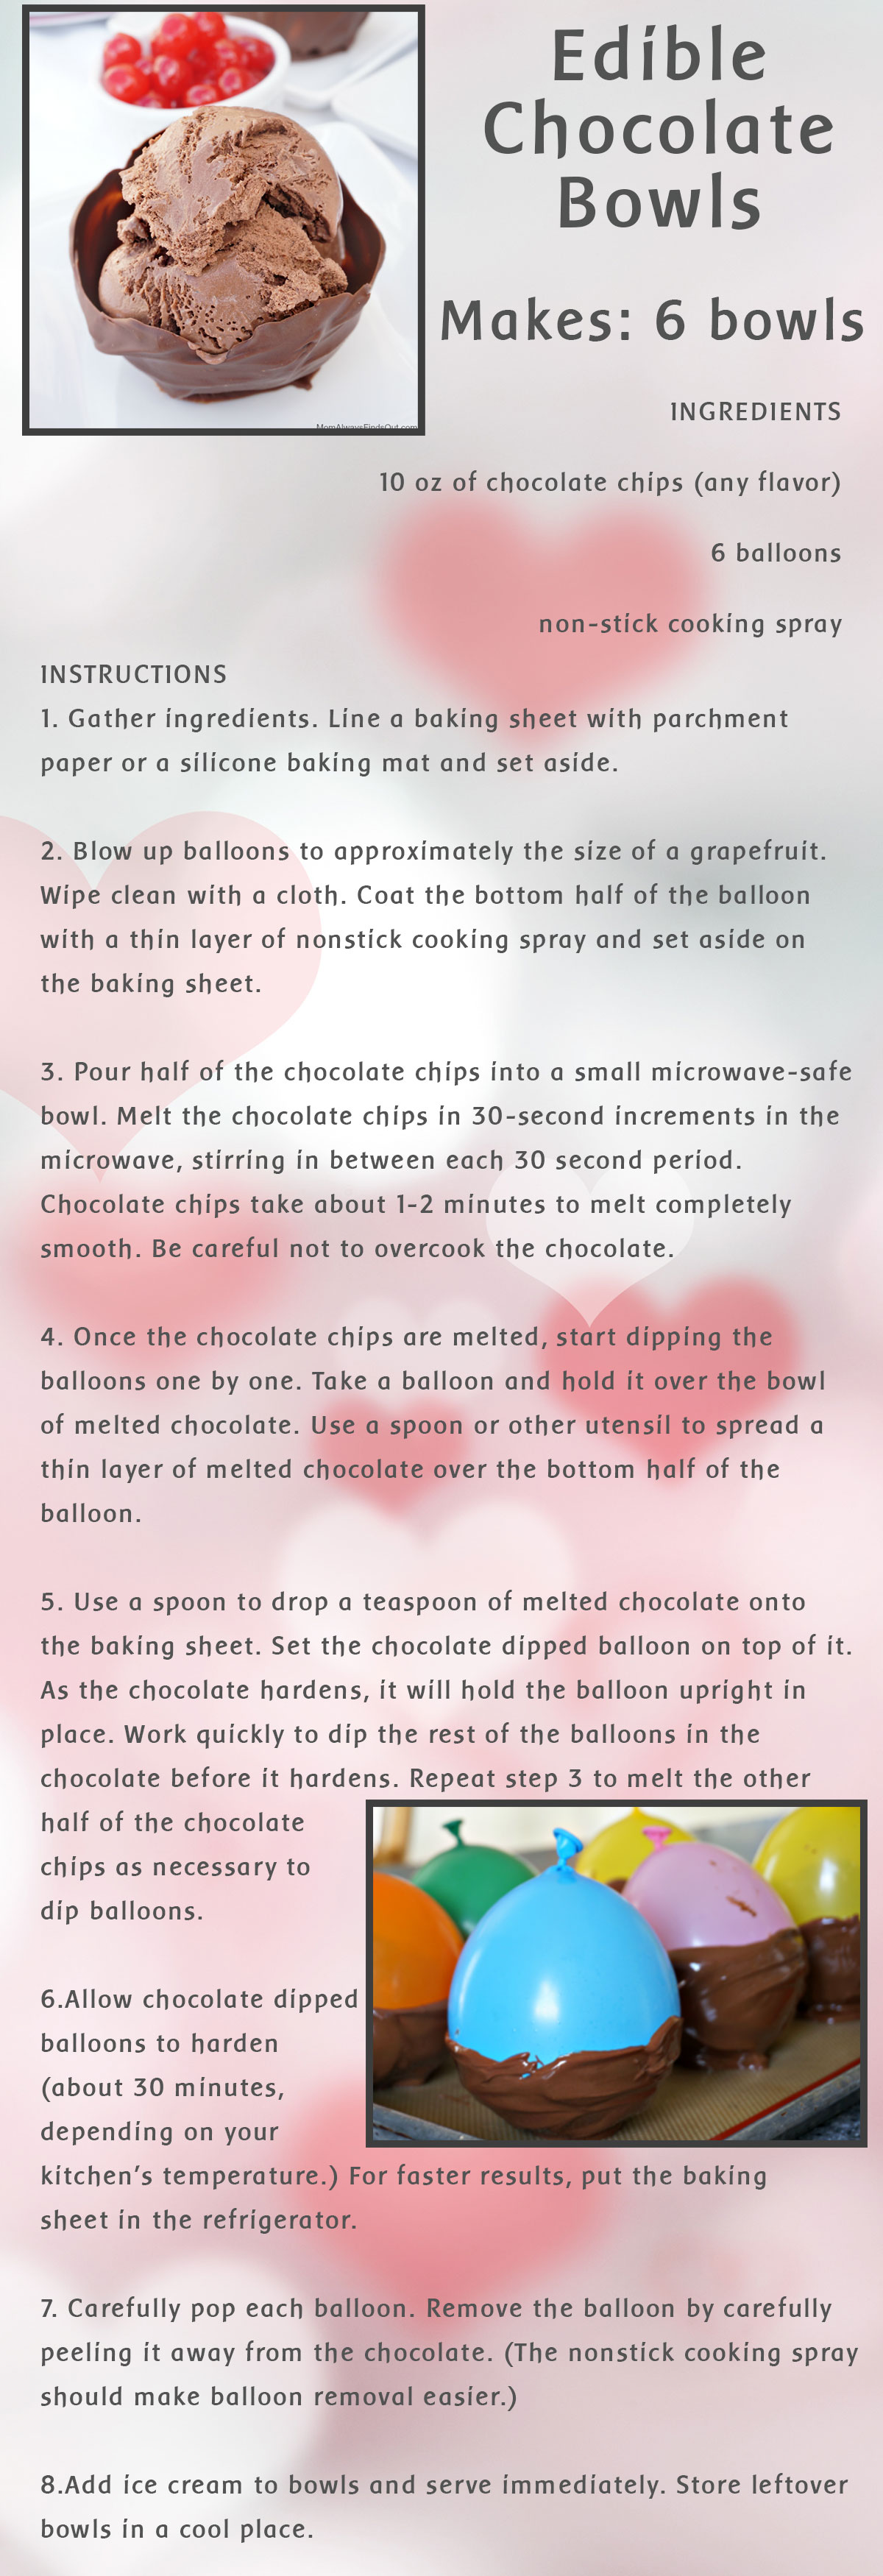 Edible Chocolate Bowls Recipe Card